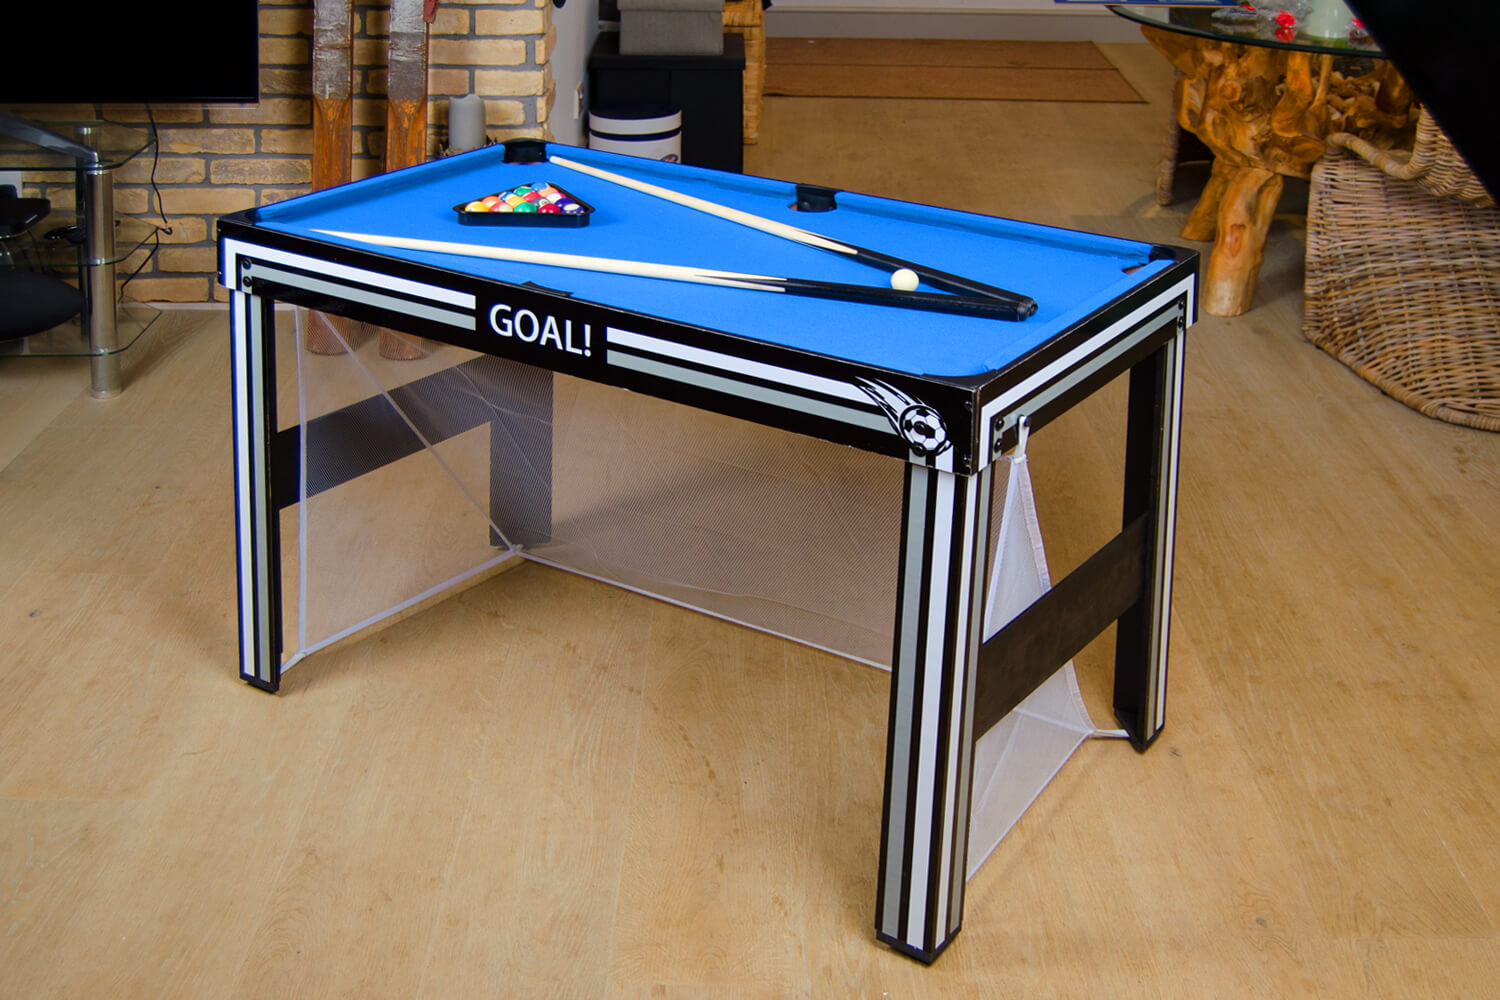 Tekscore Goal 21-in-1 4ft Multi Games Table  Multi game table, Table games,  Goals football